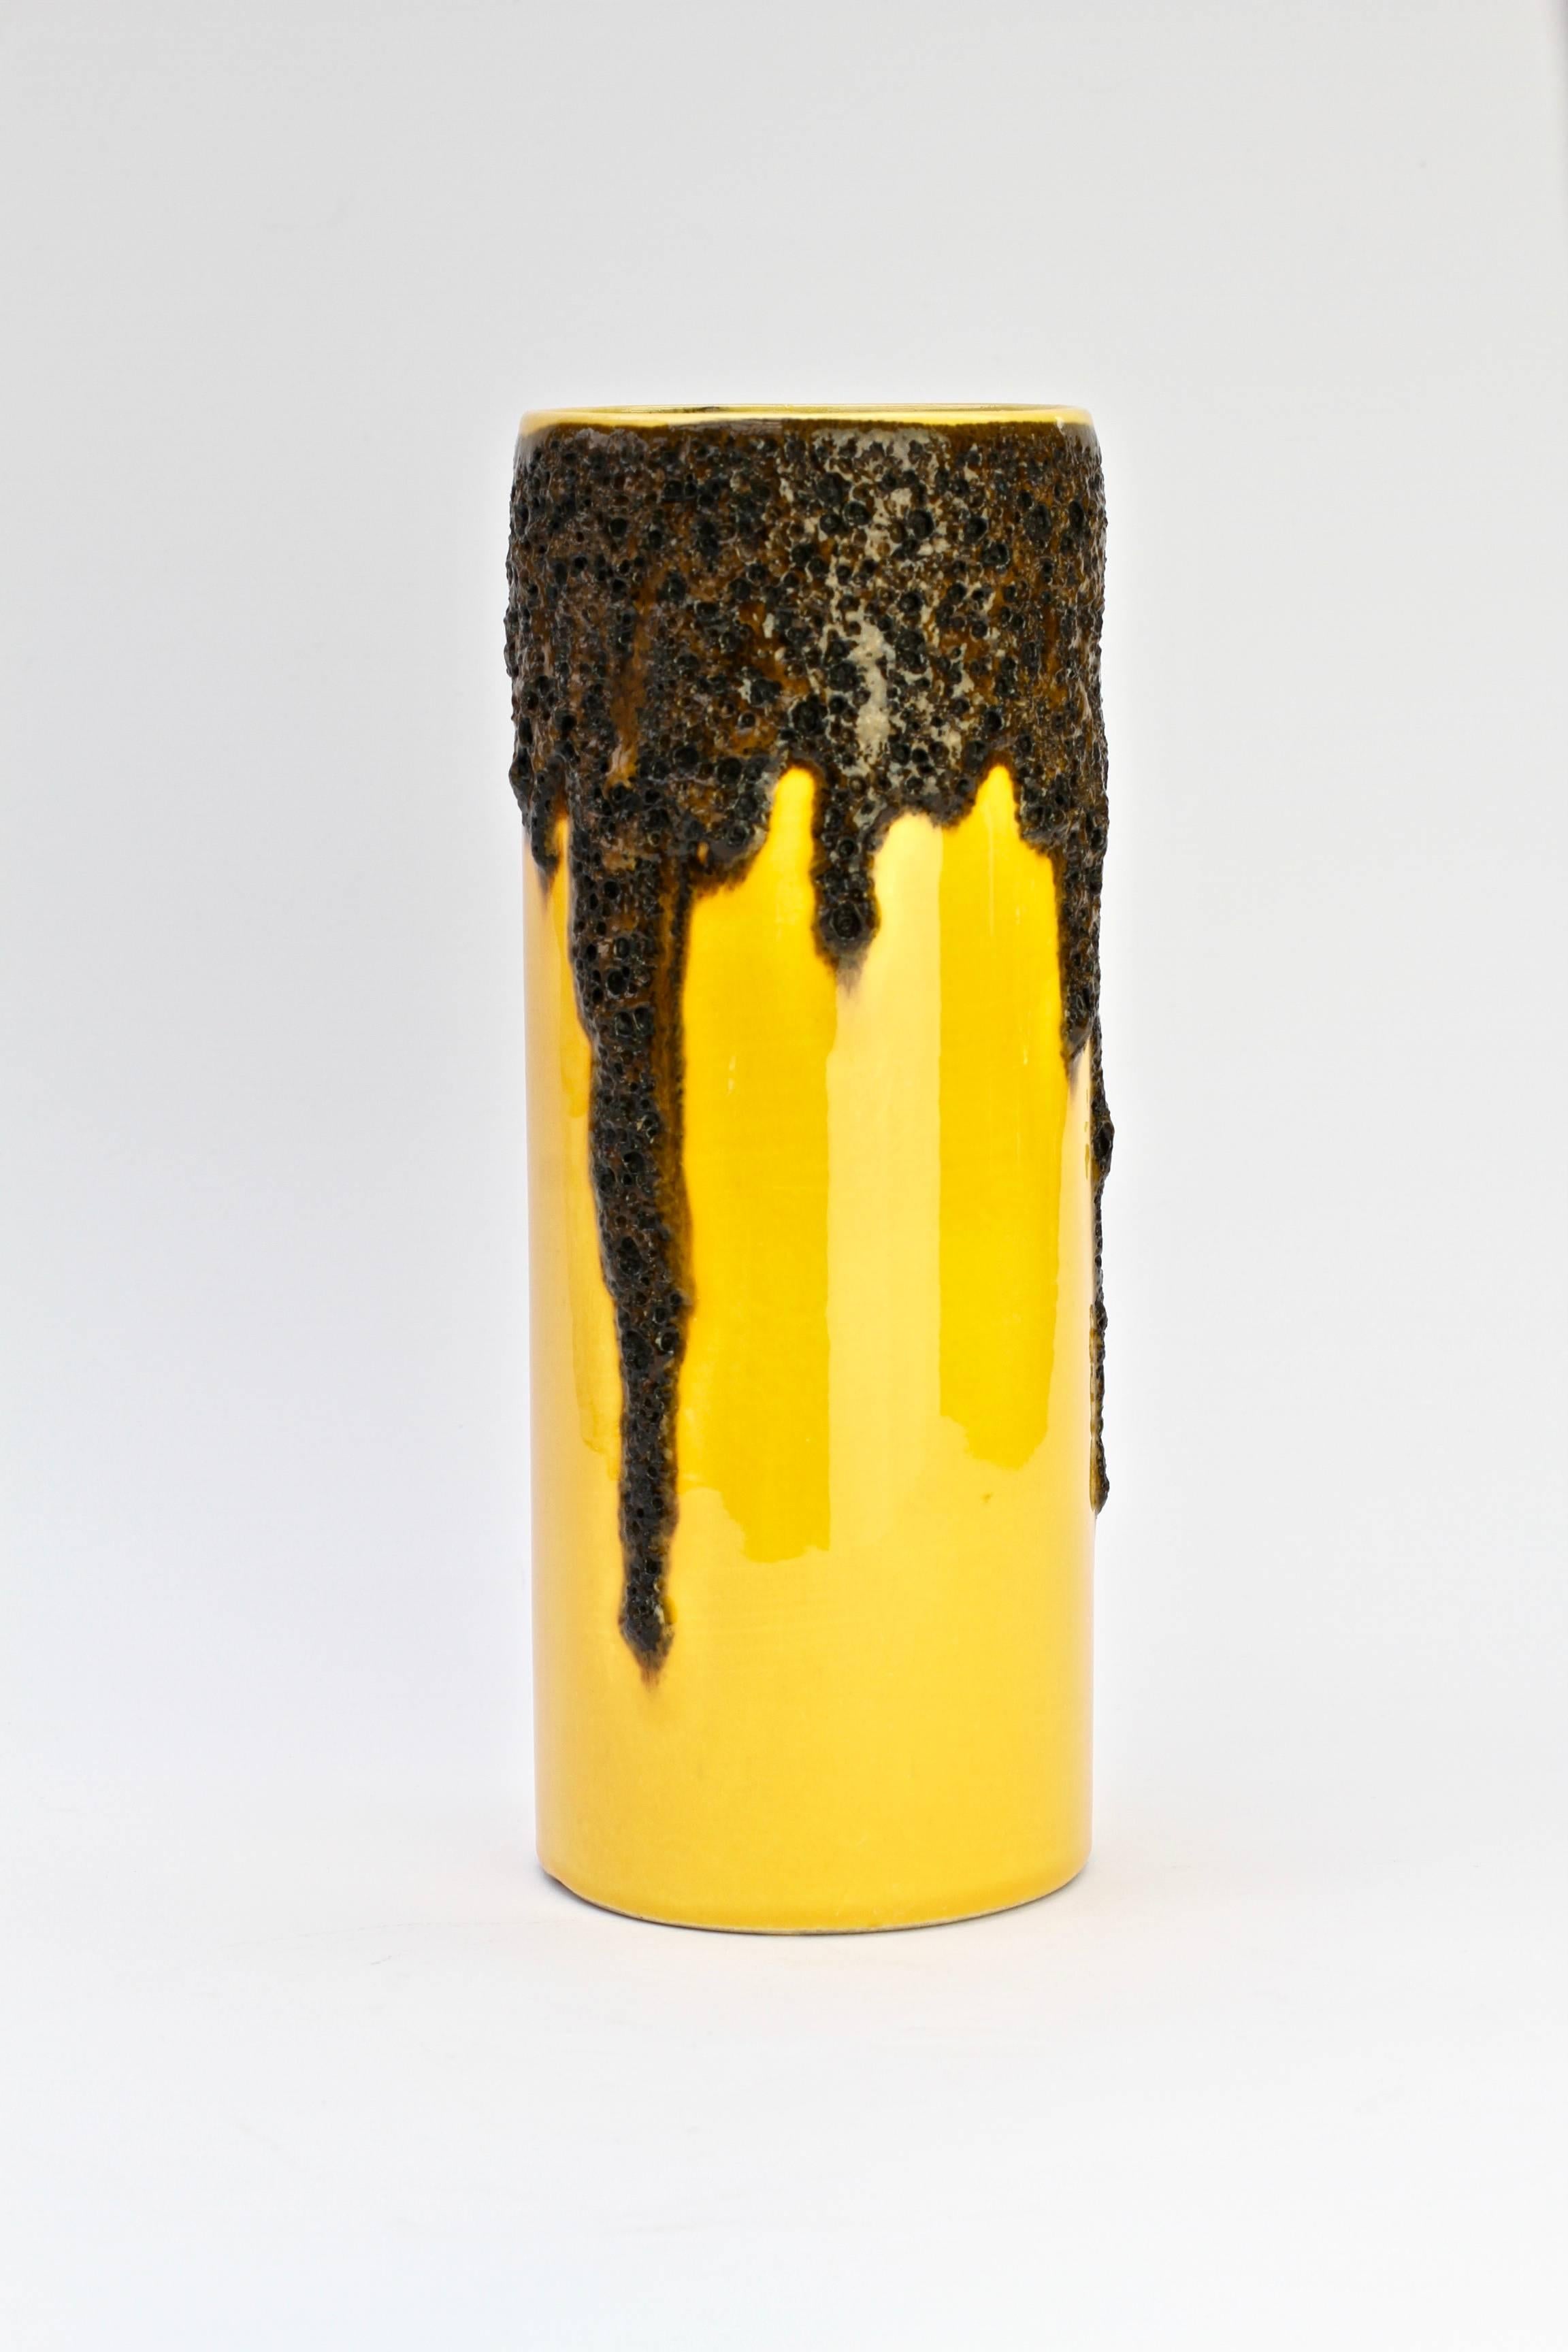 Glazed 1970s Bright Yellow West German Pottery Fohr Vase with Black Lava Glaze